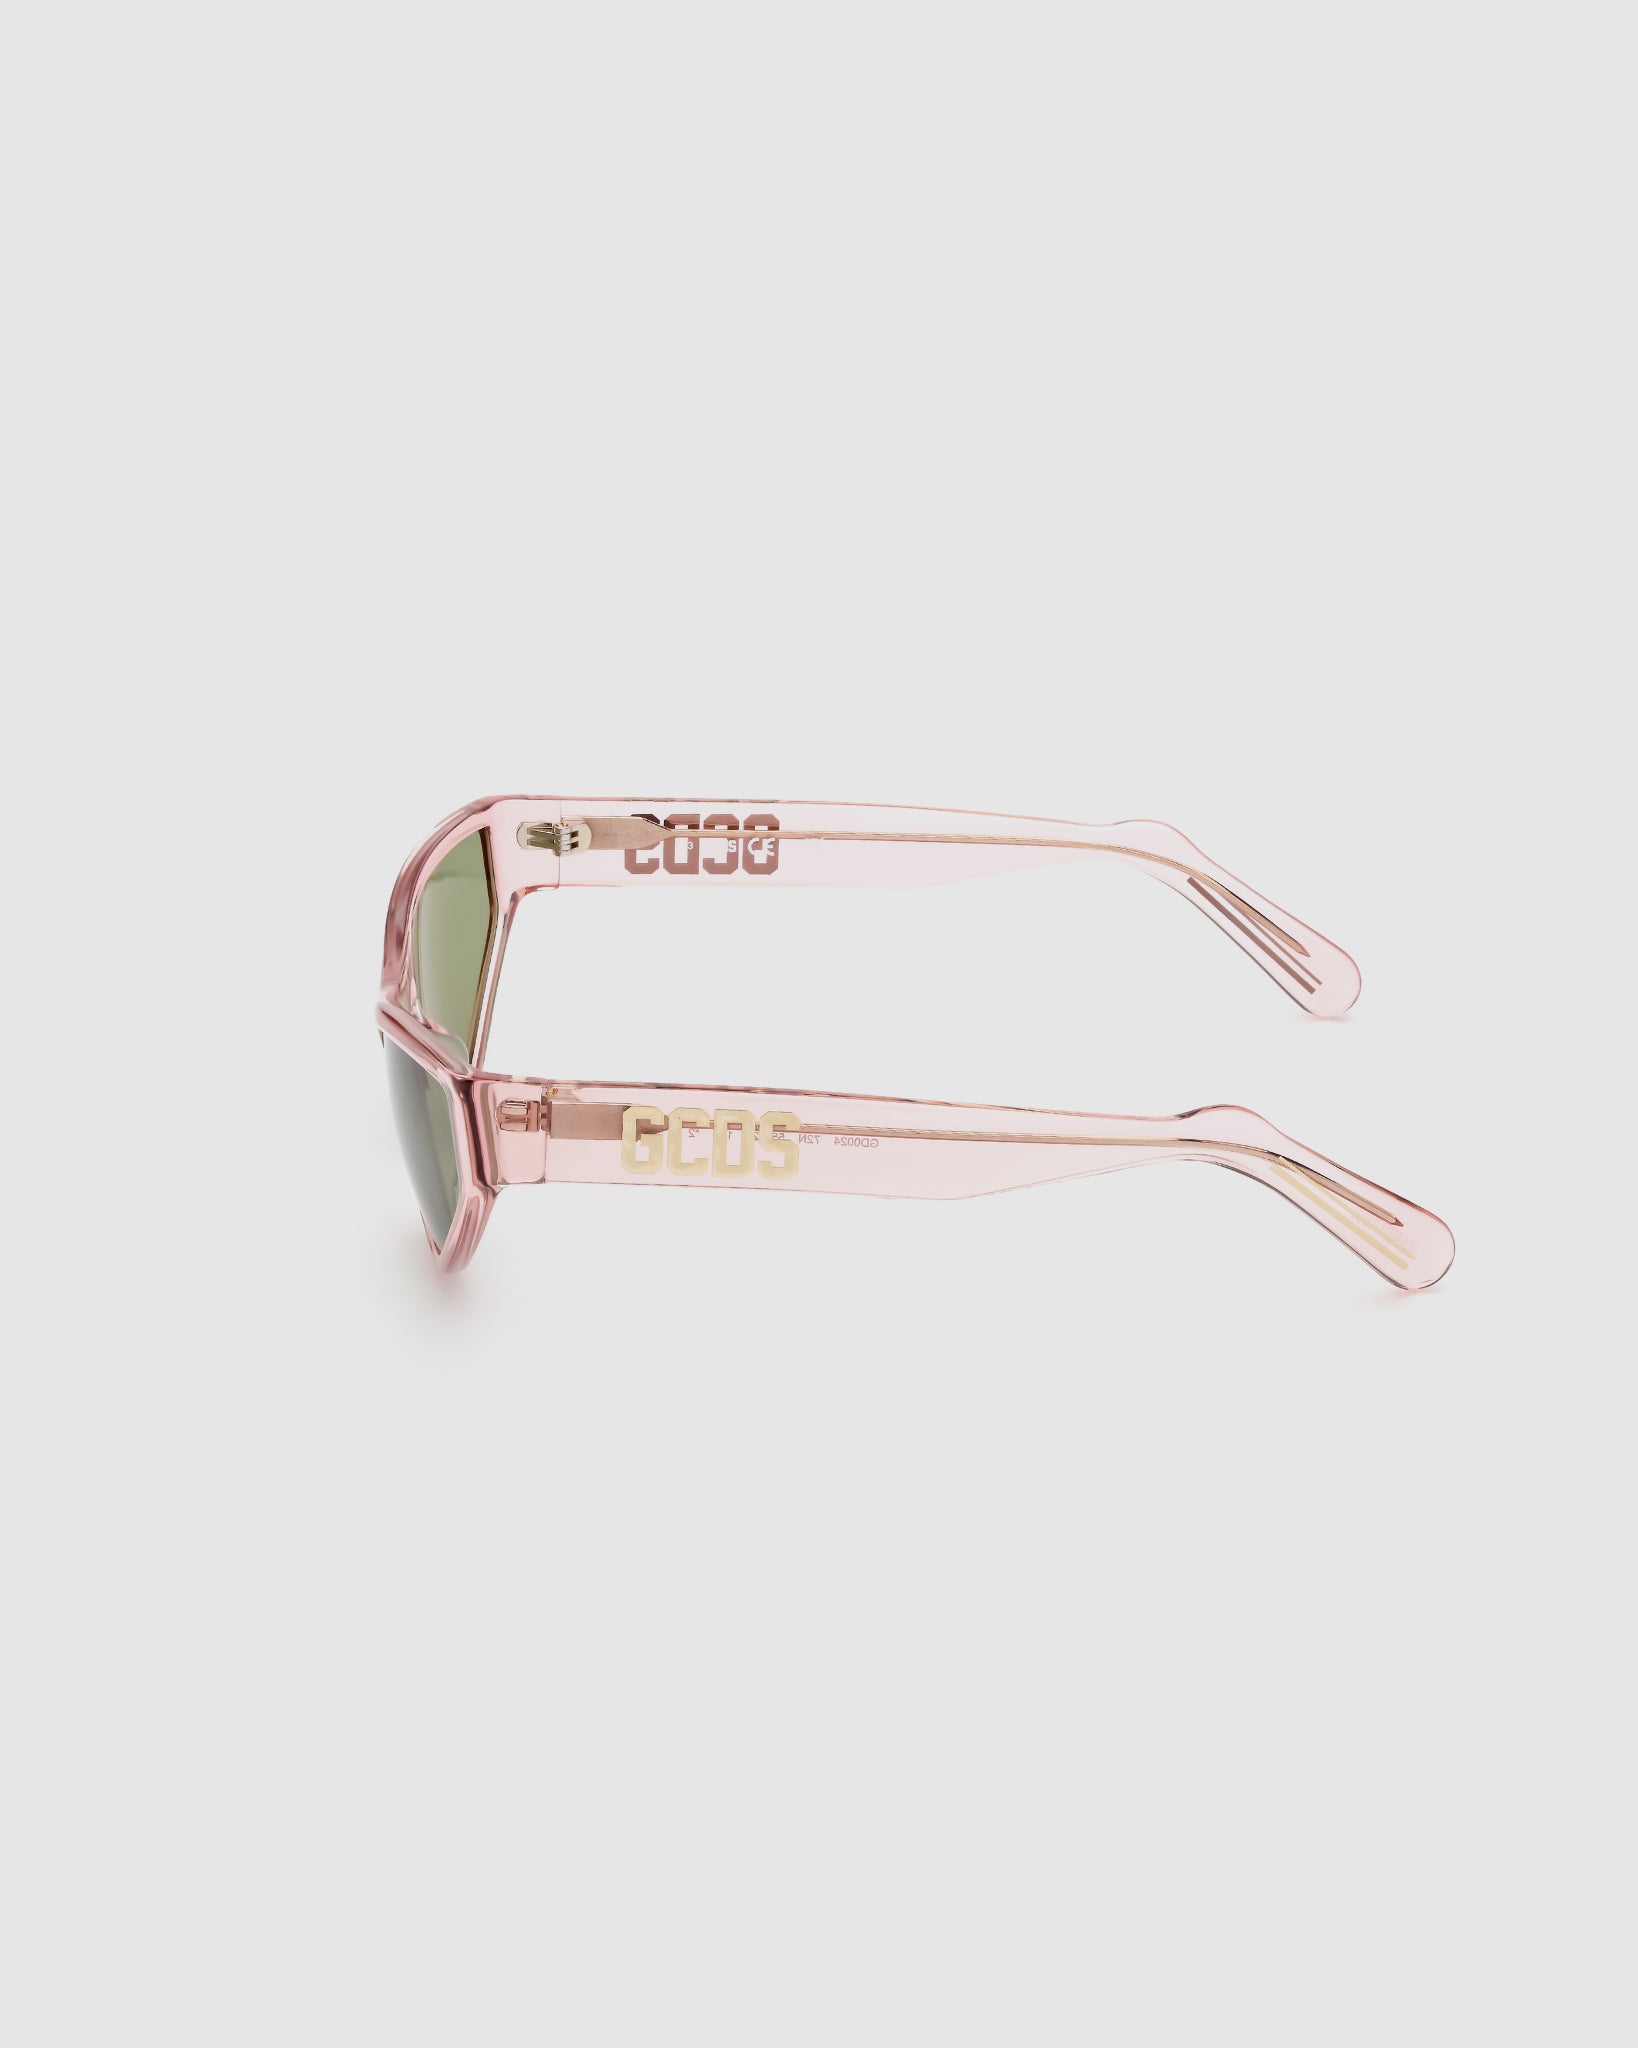 GD0022 Cat-eye sunglasses : Unisex Sunglasses Pink